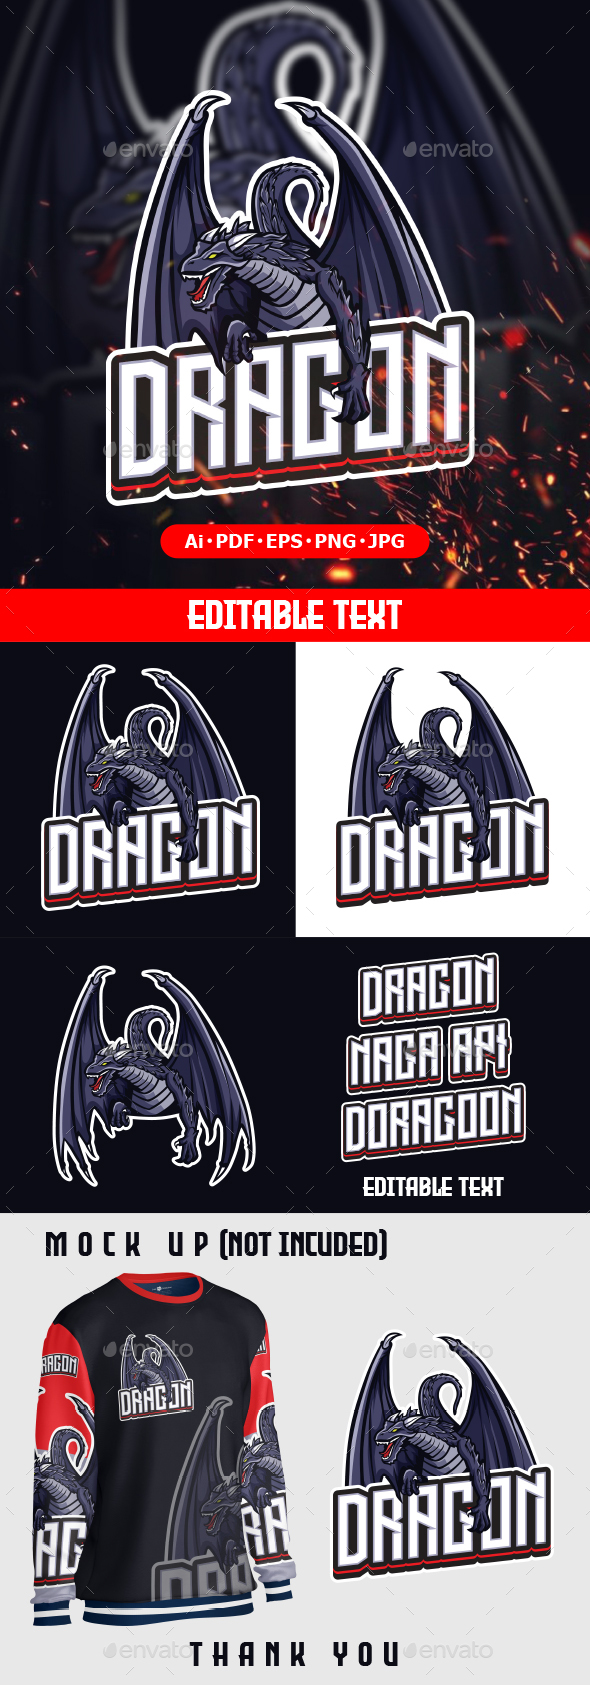 Dragon Mascot logo for eSport